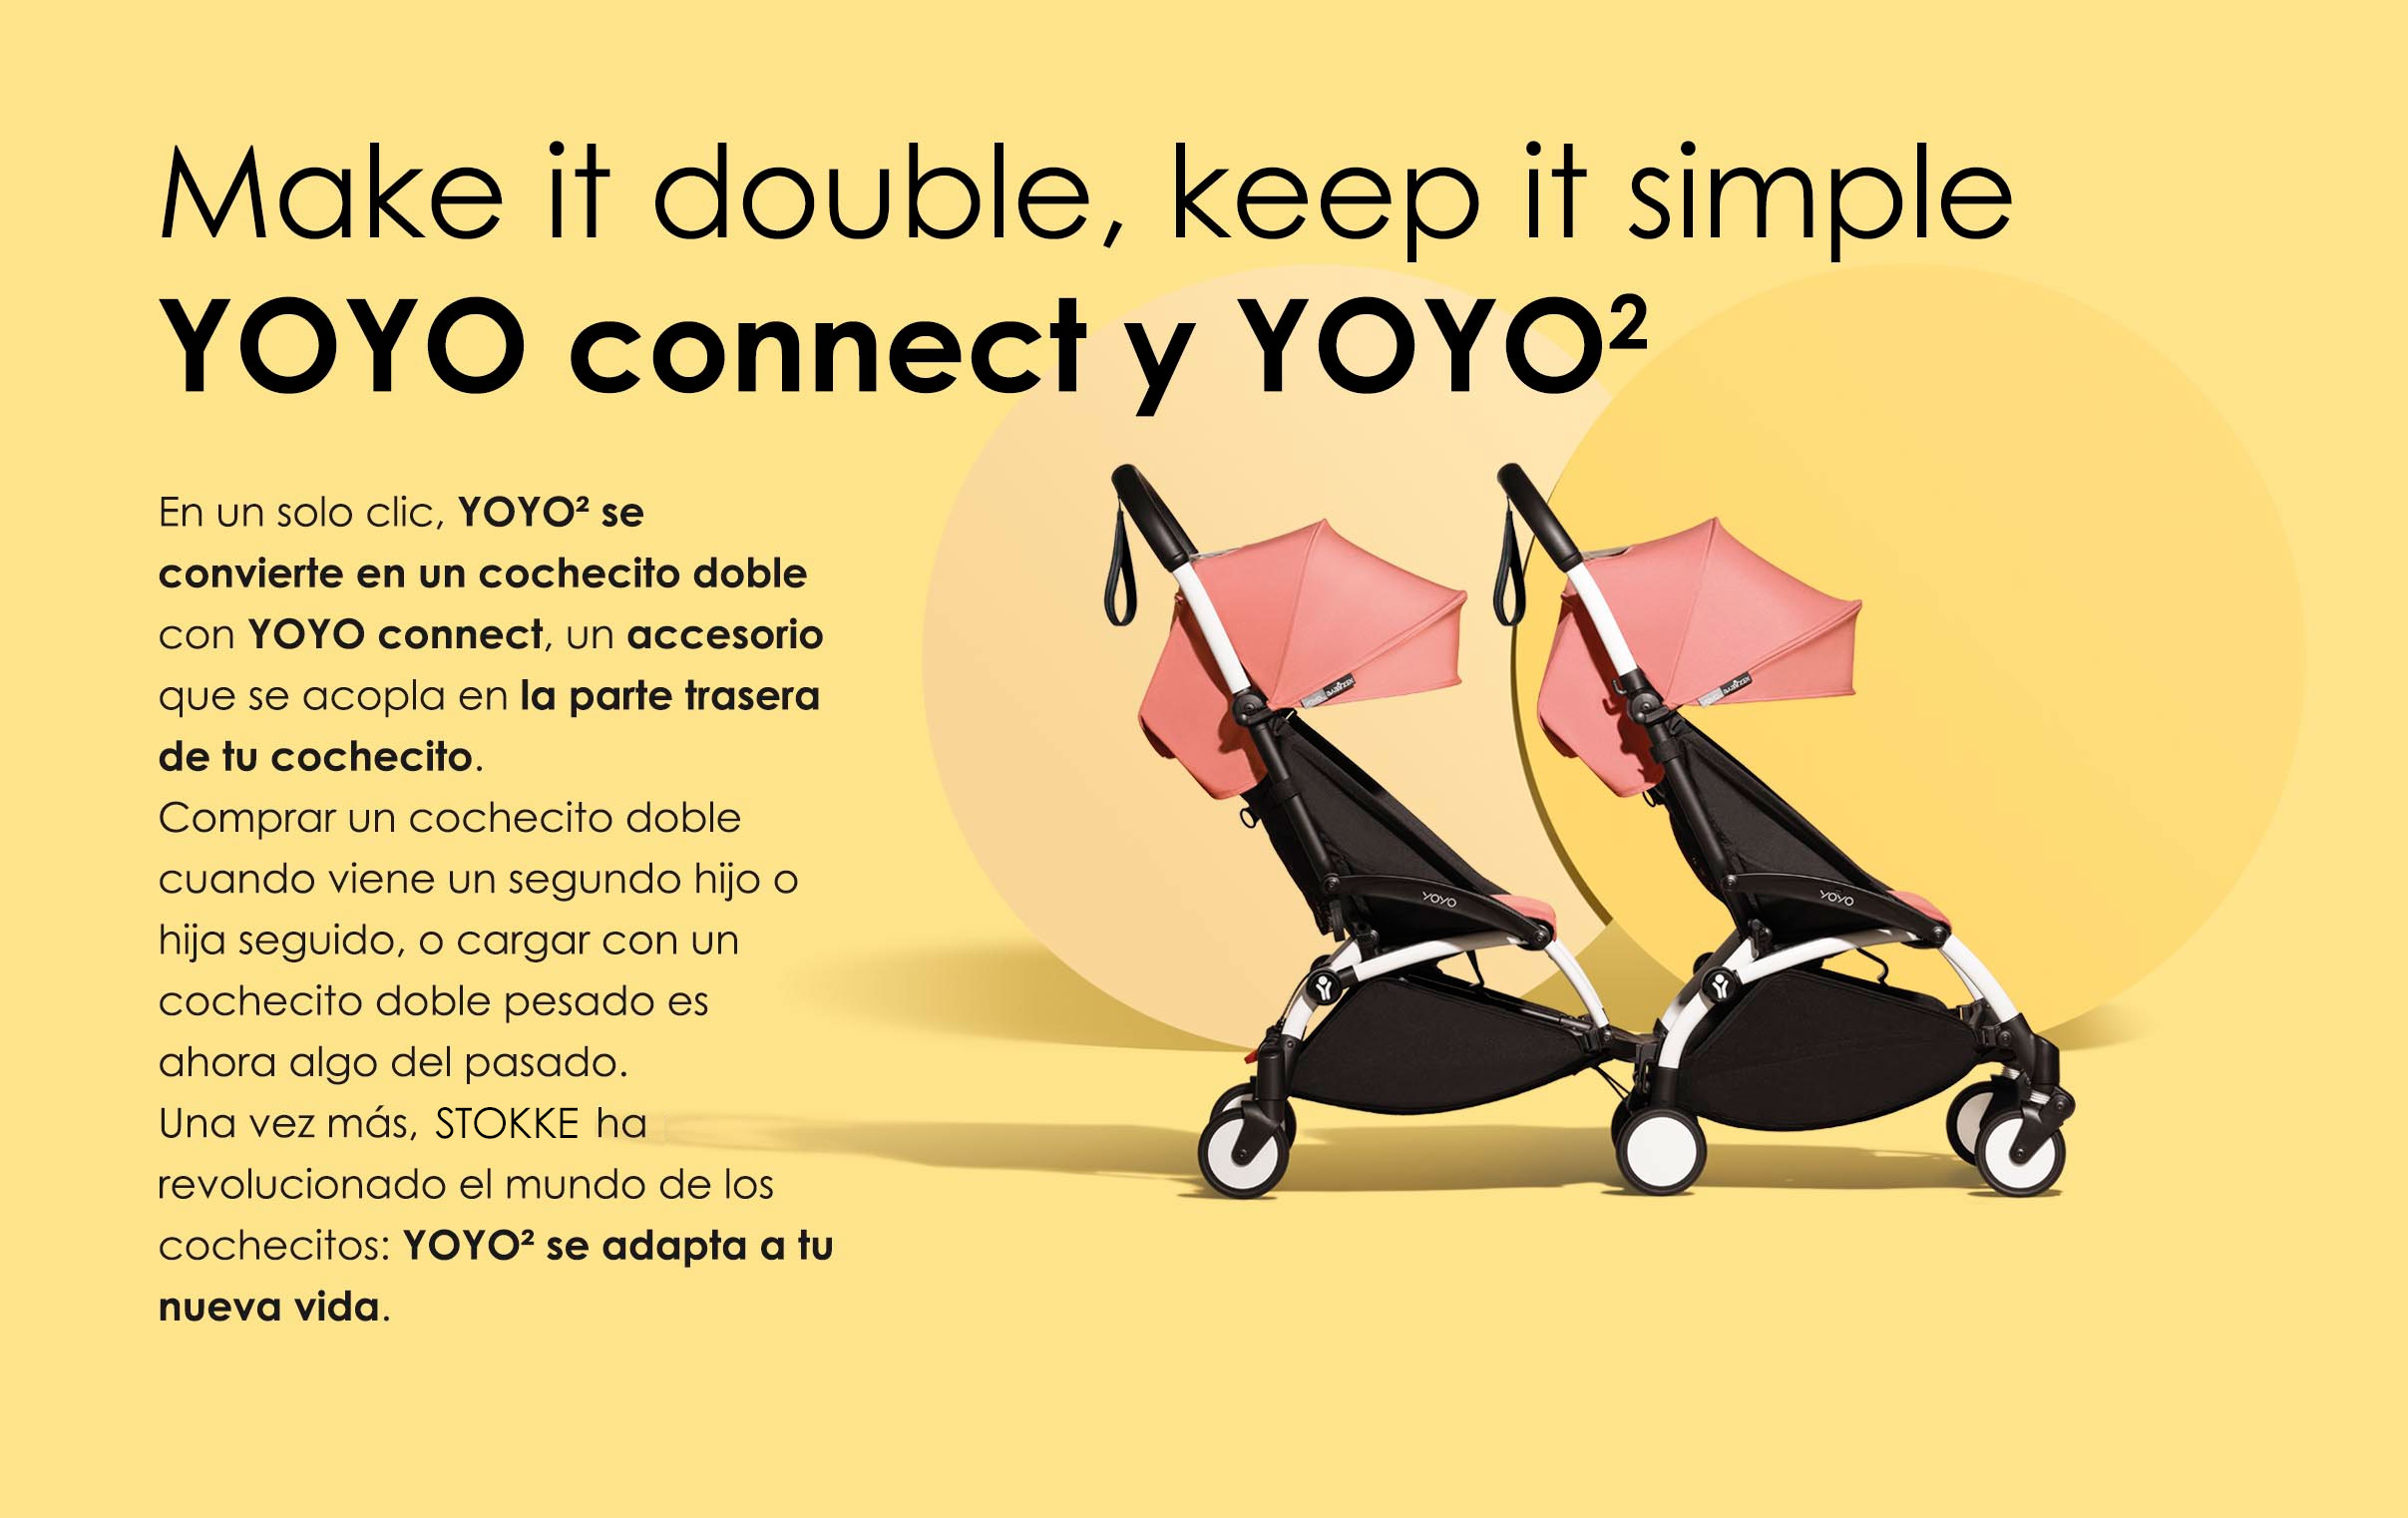 yoyo connect para yoyo 2 de babyzen transforma tu cochecito en un cochecito doble con un solo clic